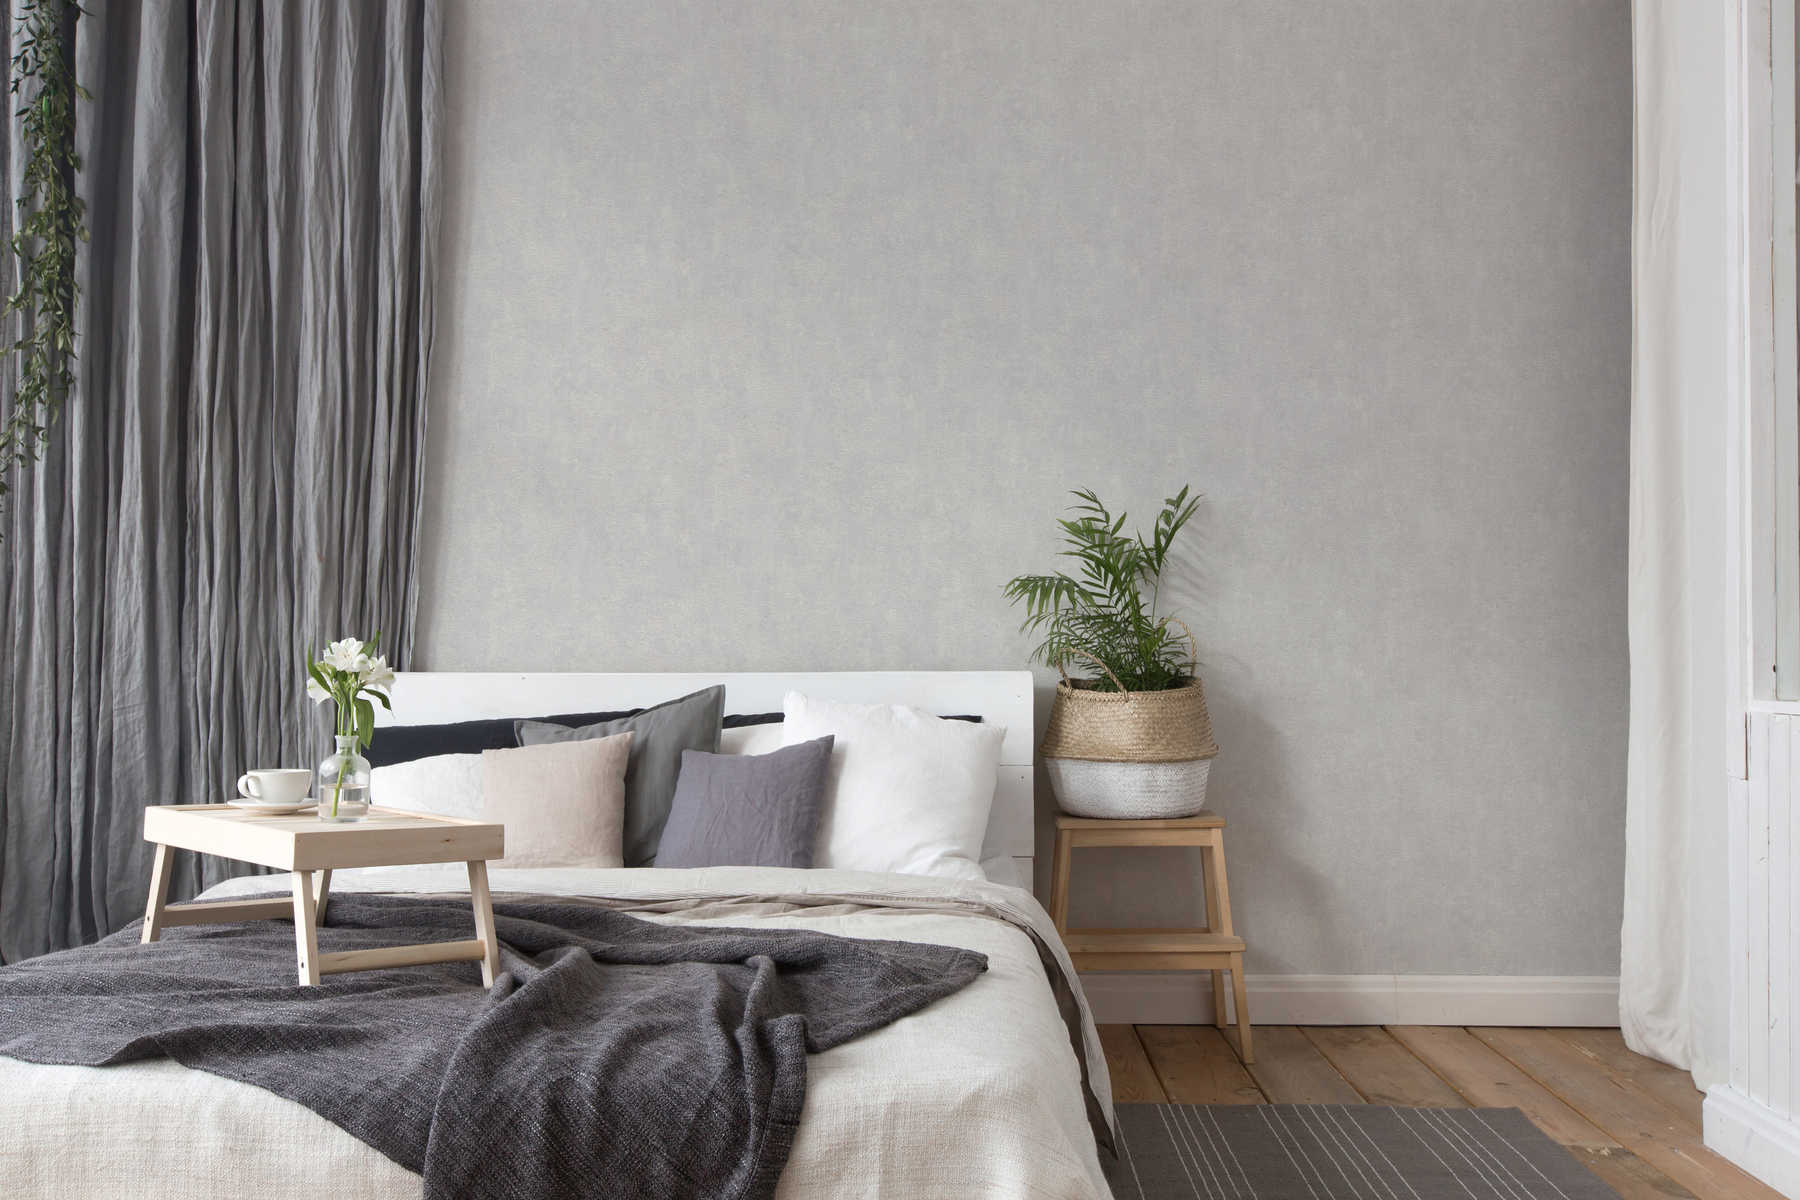             Wallpaper plaster structure, plain & satin - light grey
        